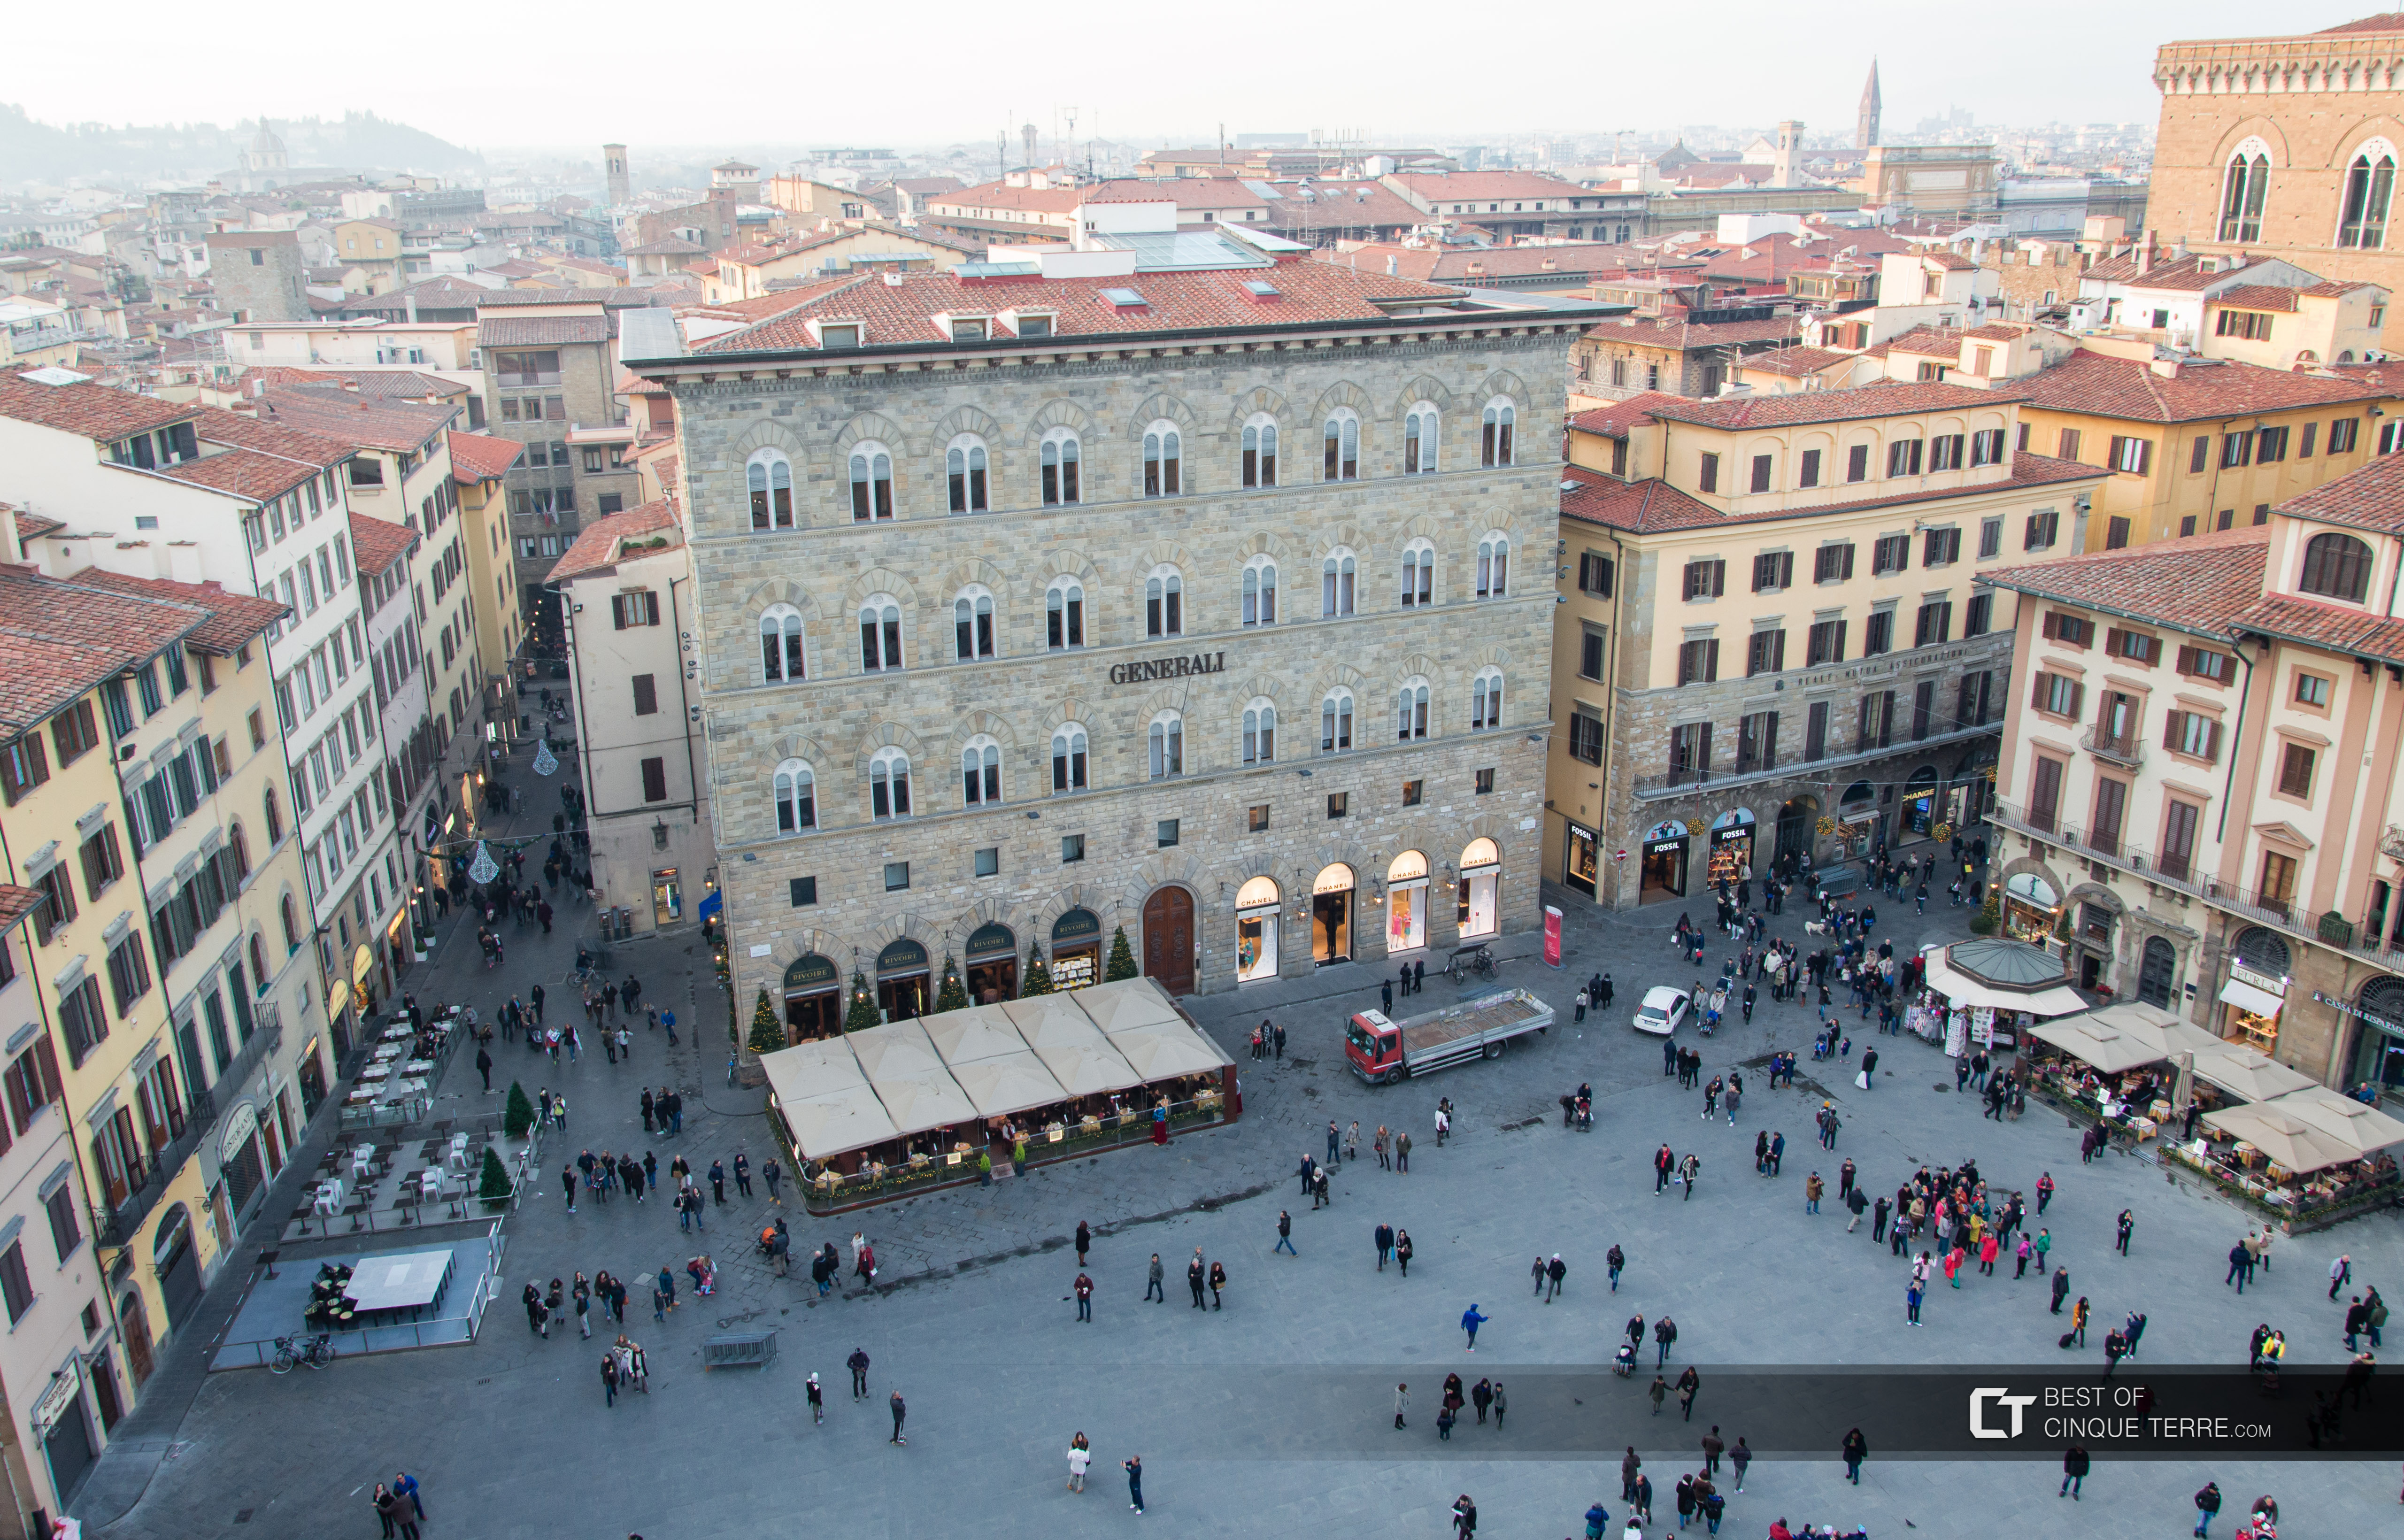 Piazza della Signoria seen from the tower of Palazzo Vecchio, Florence, Italy